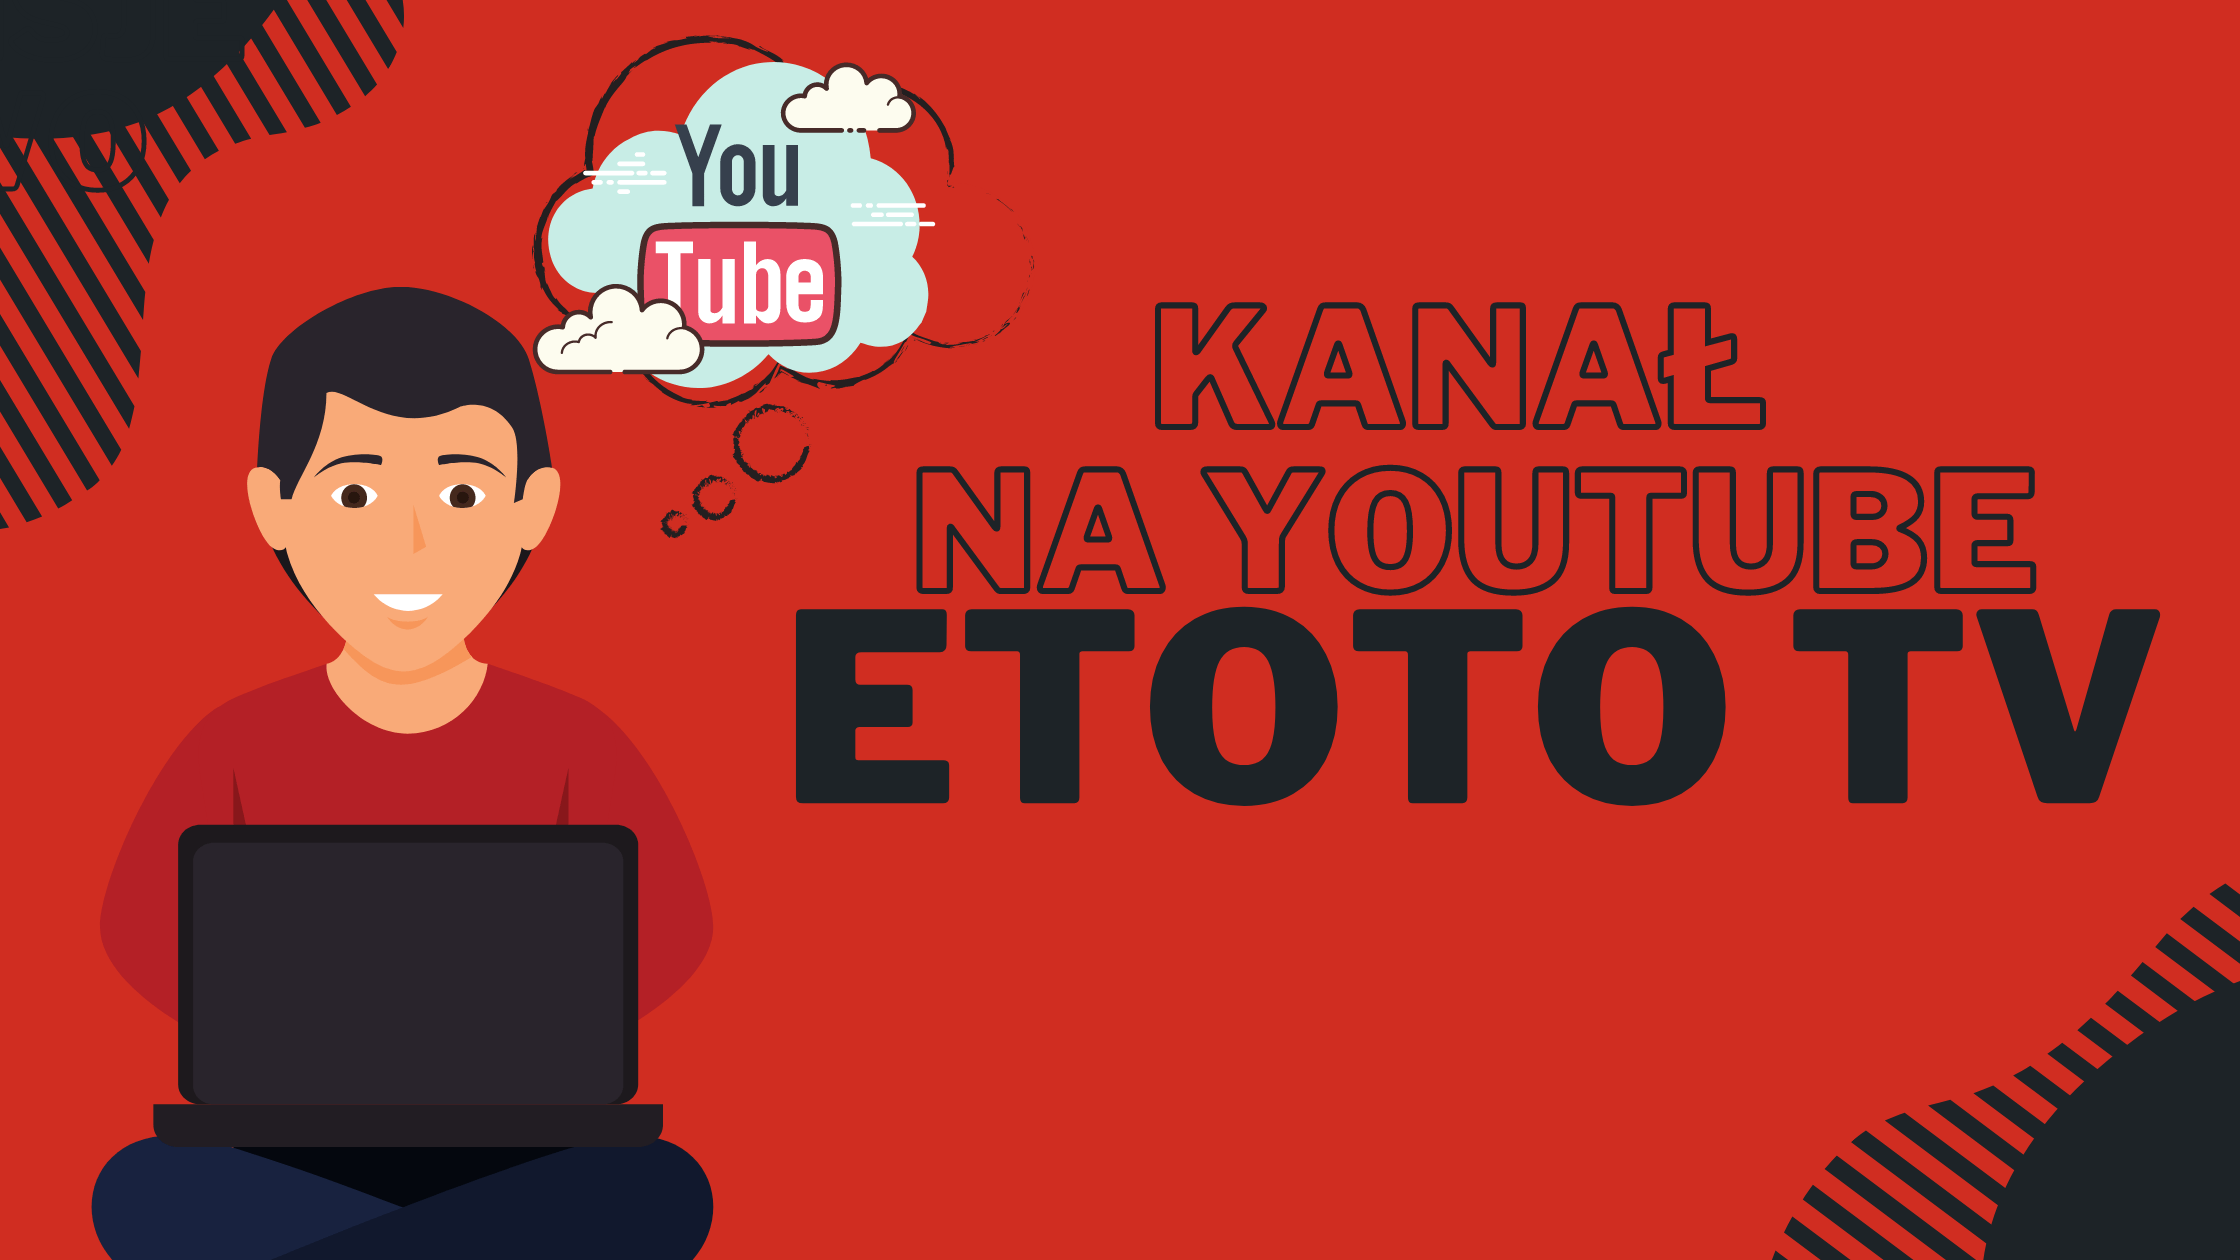 Etoto TV kanal na youtube